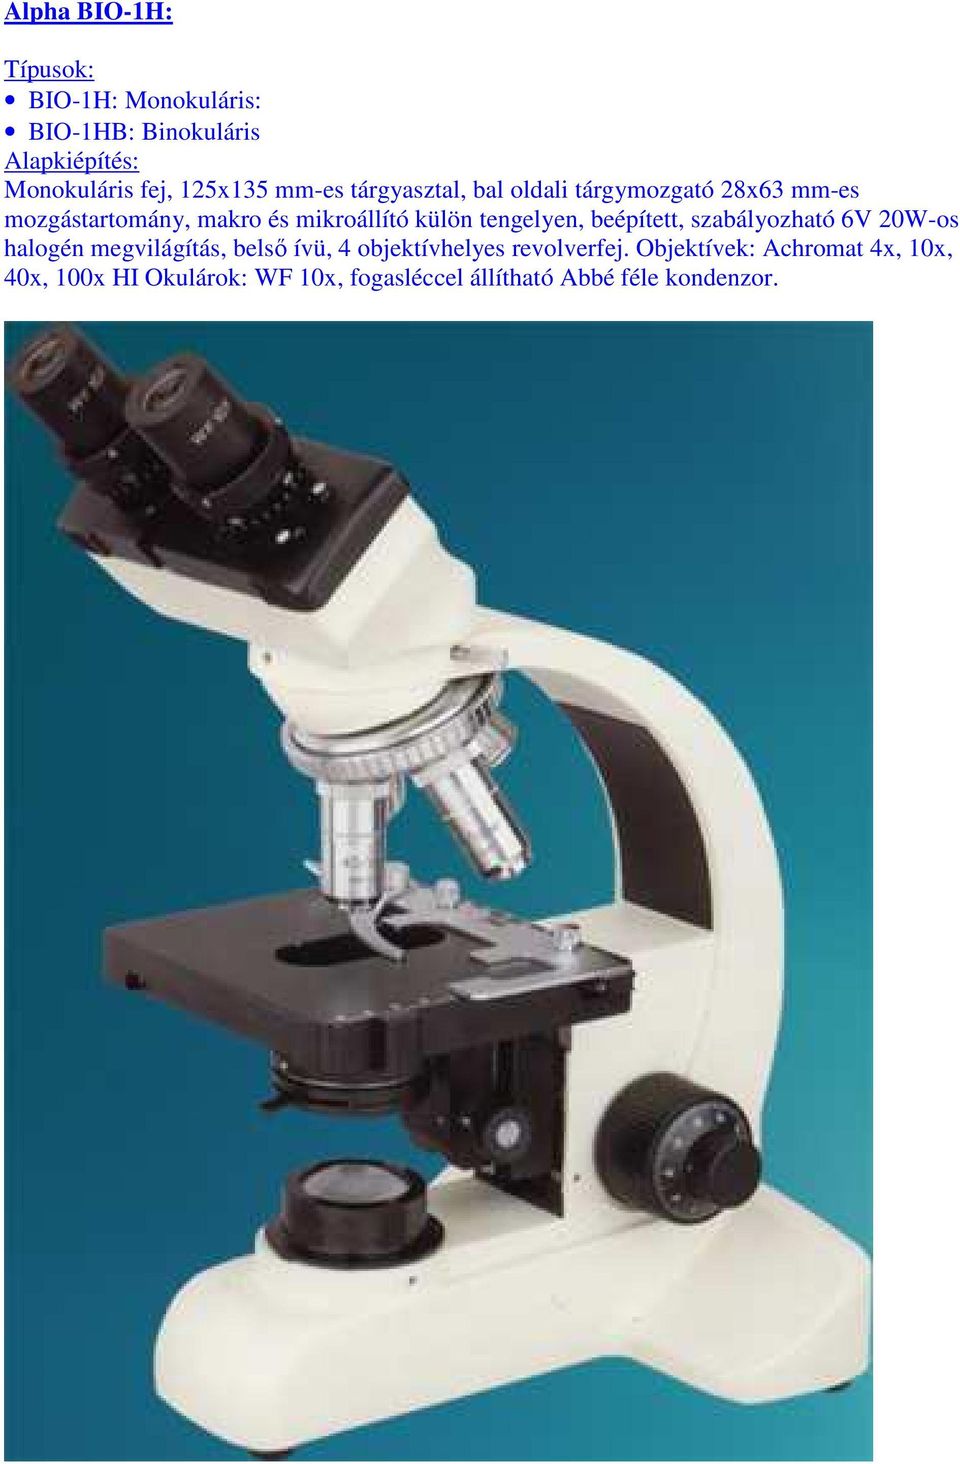 Alpha Biológiai mikroszkópok leírásai, - PDF Free Download